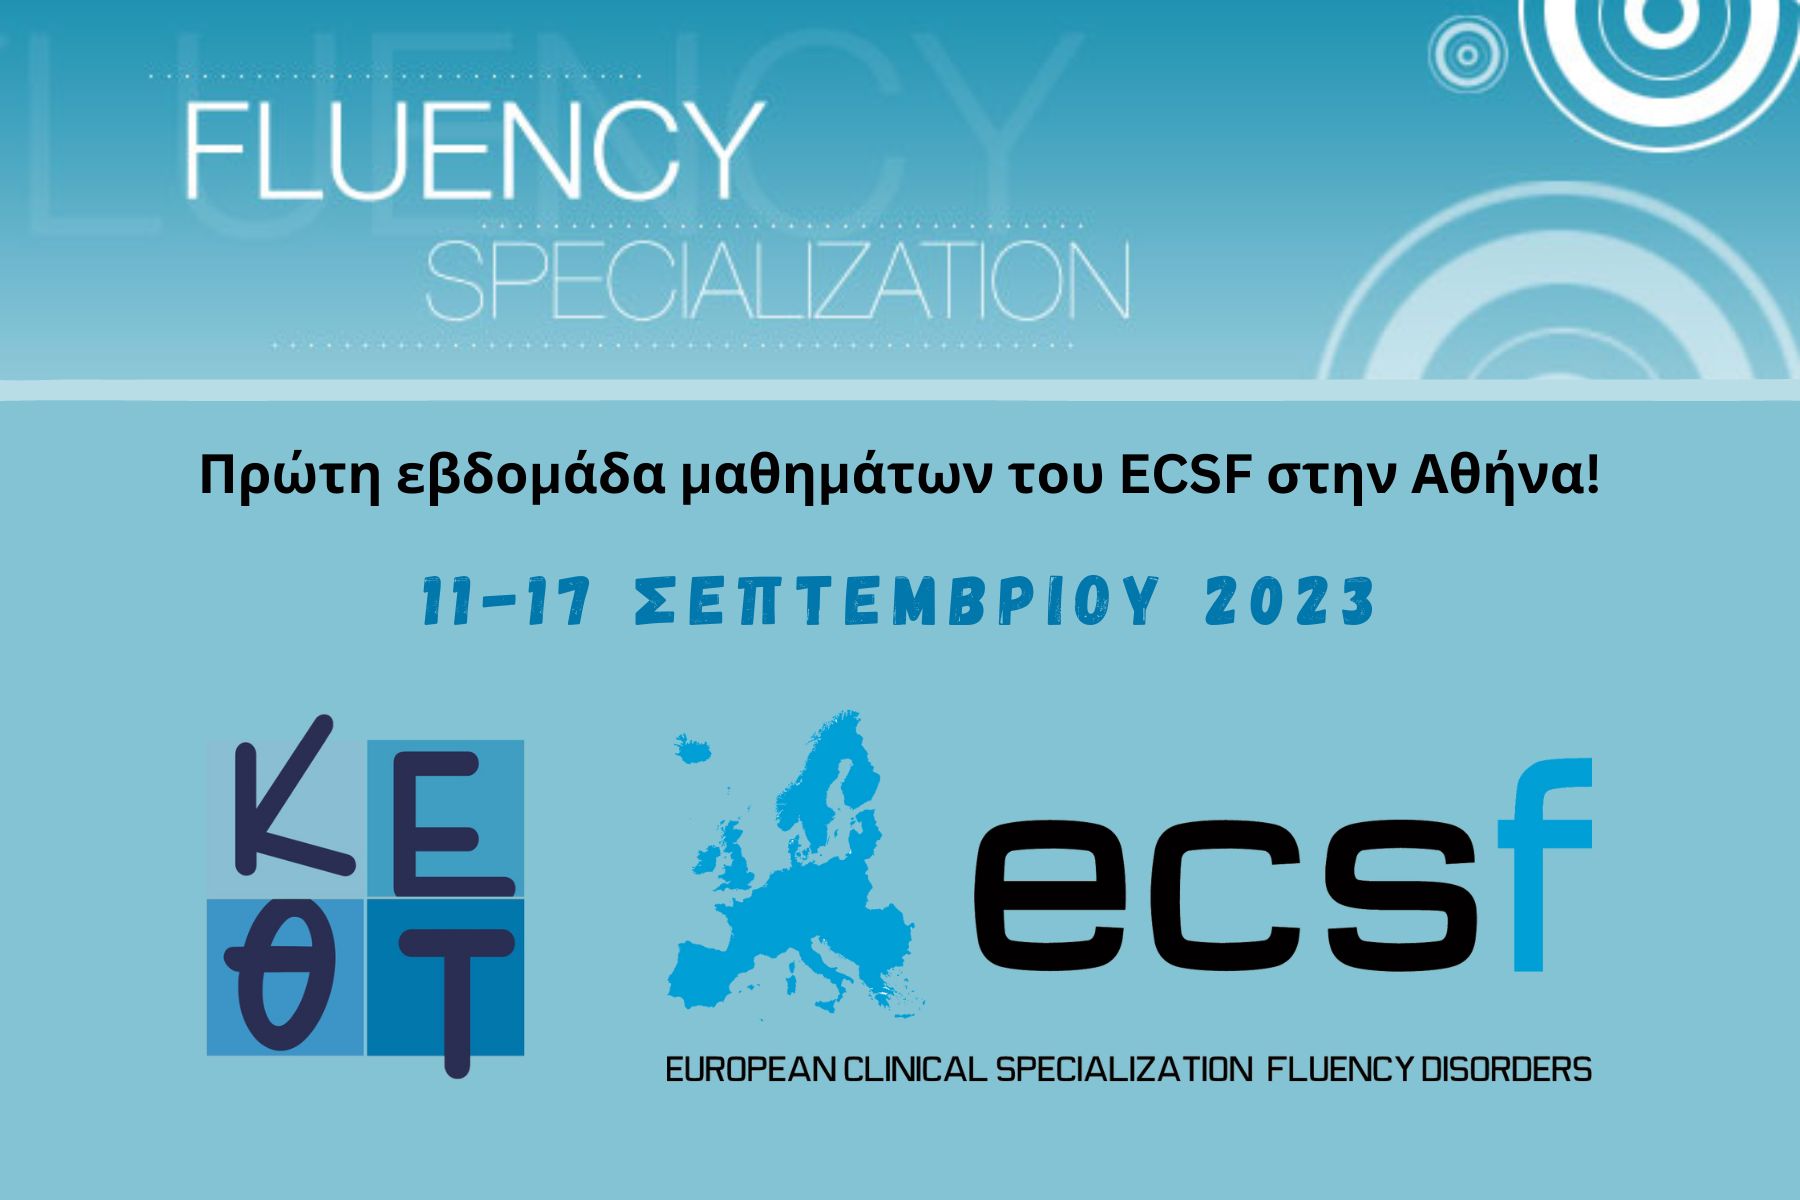 ECSF Fluency Specialization